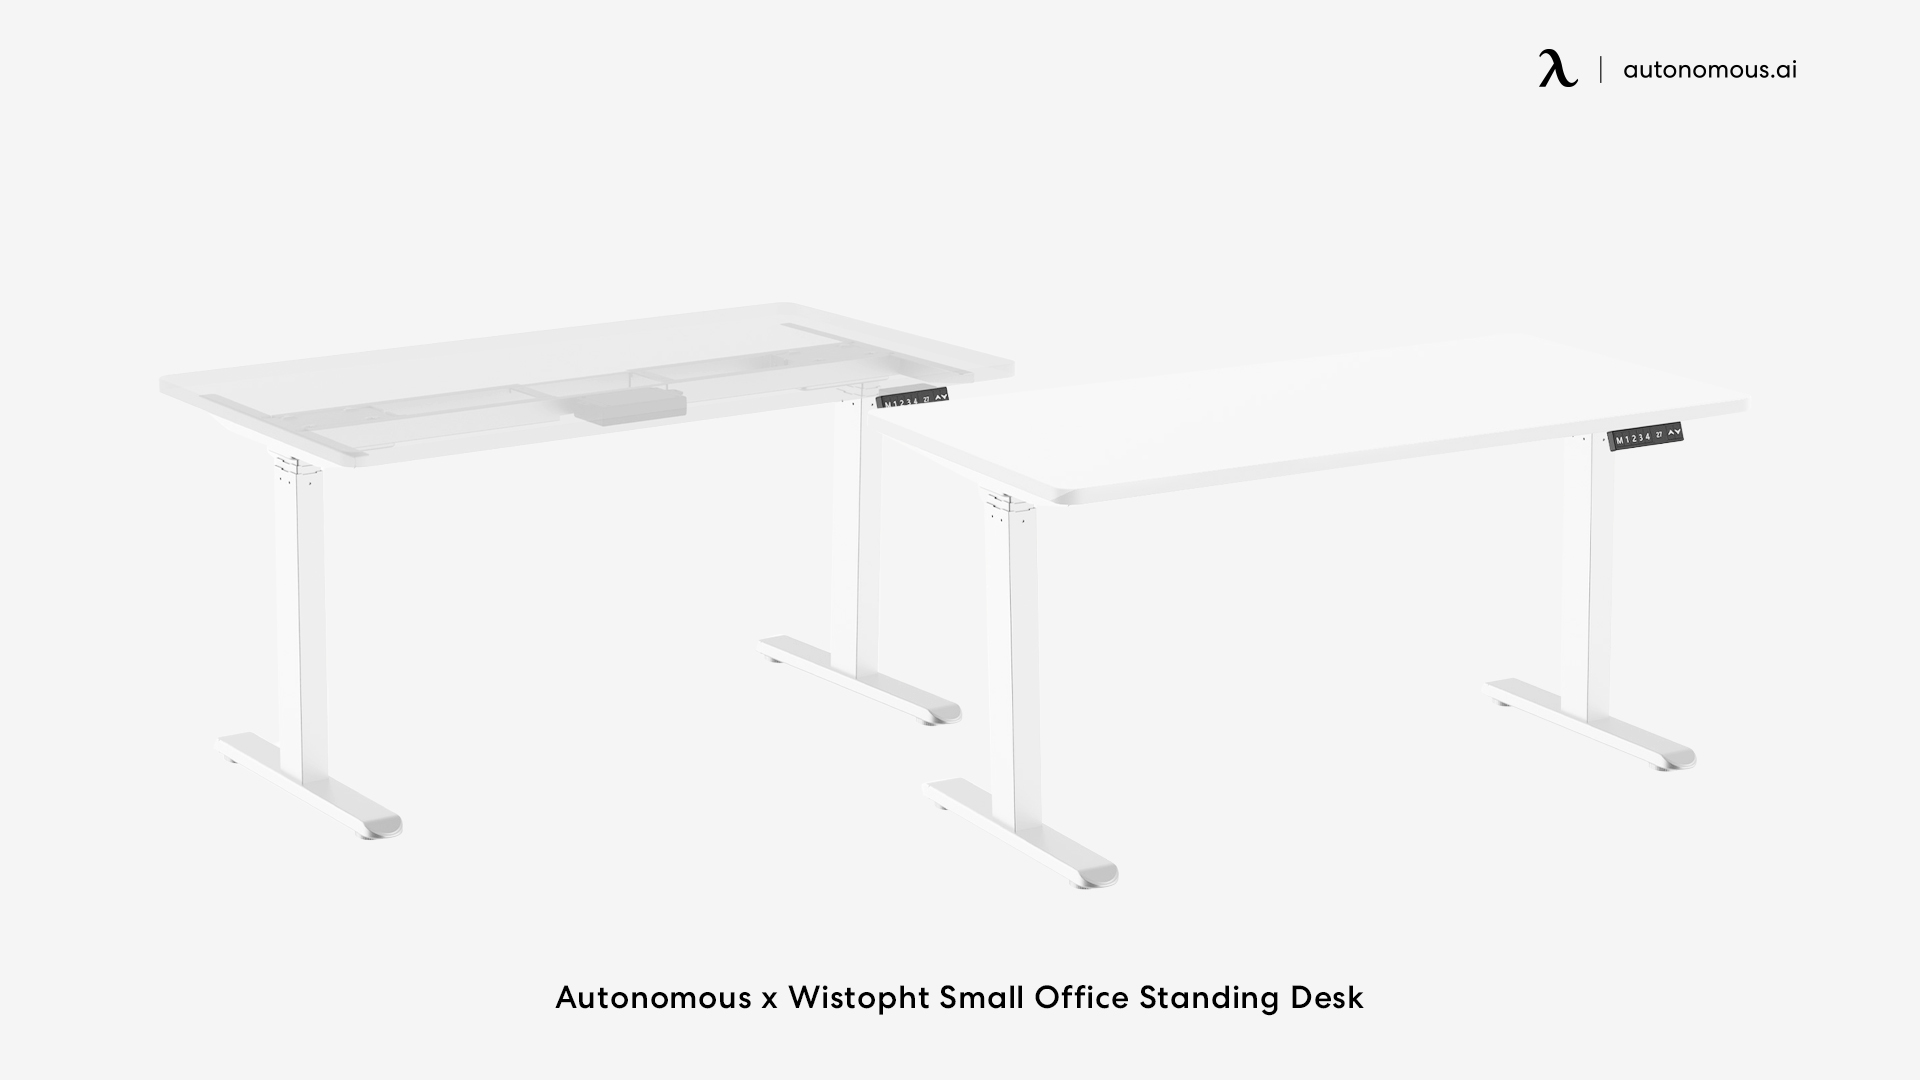 Compact Desk by Wistopht: Programmable Keypad